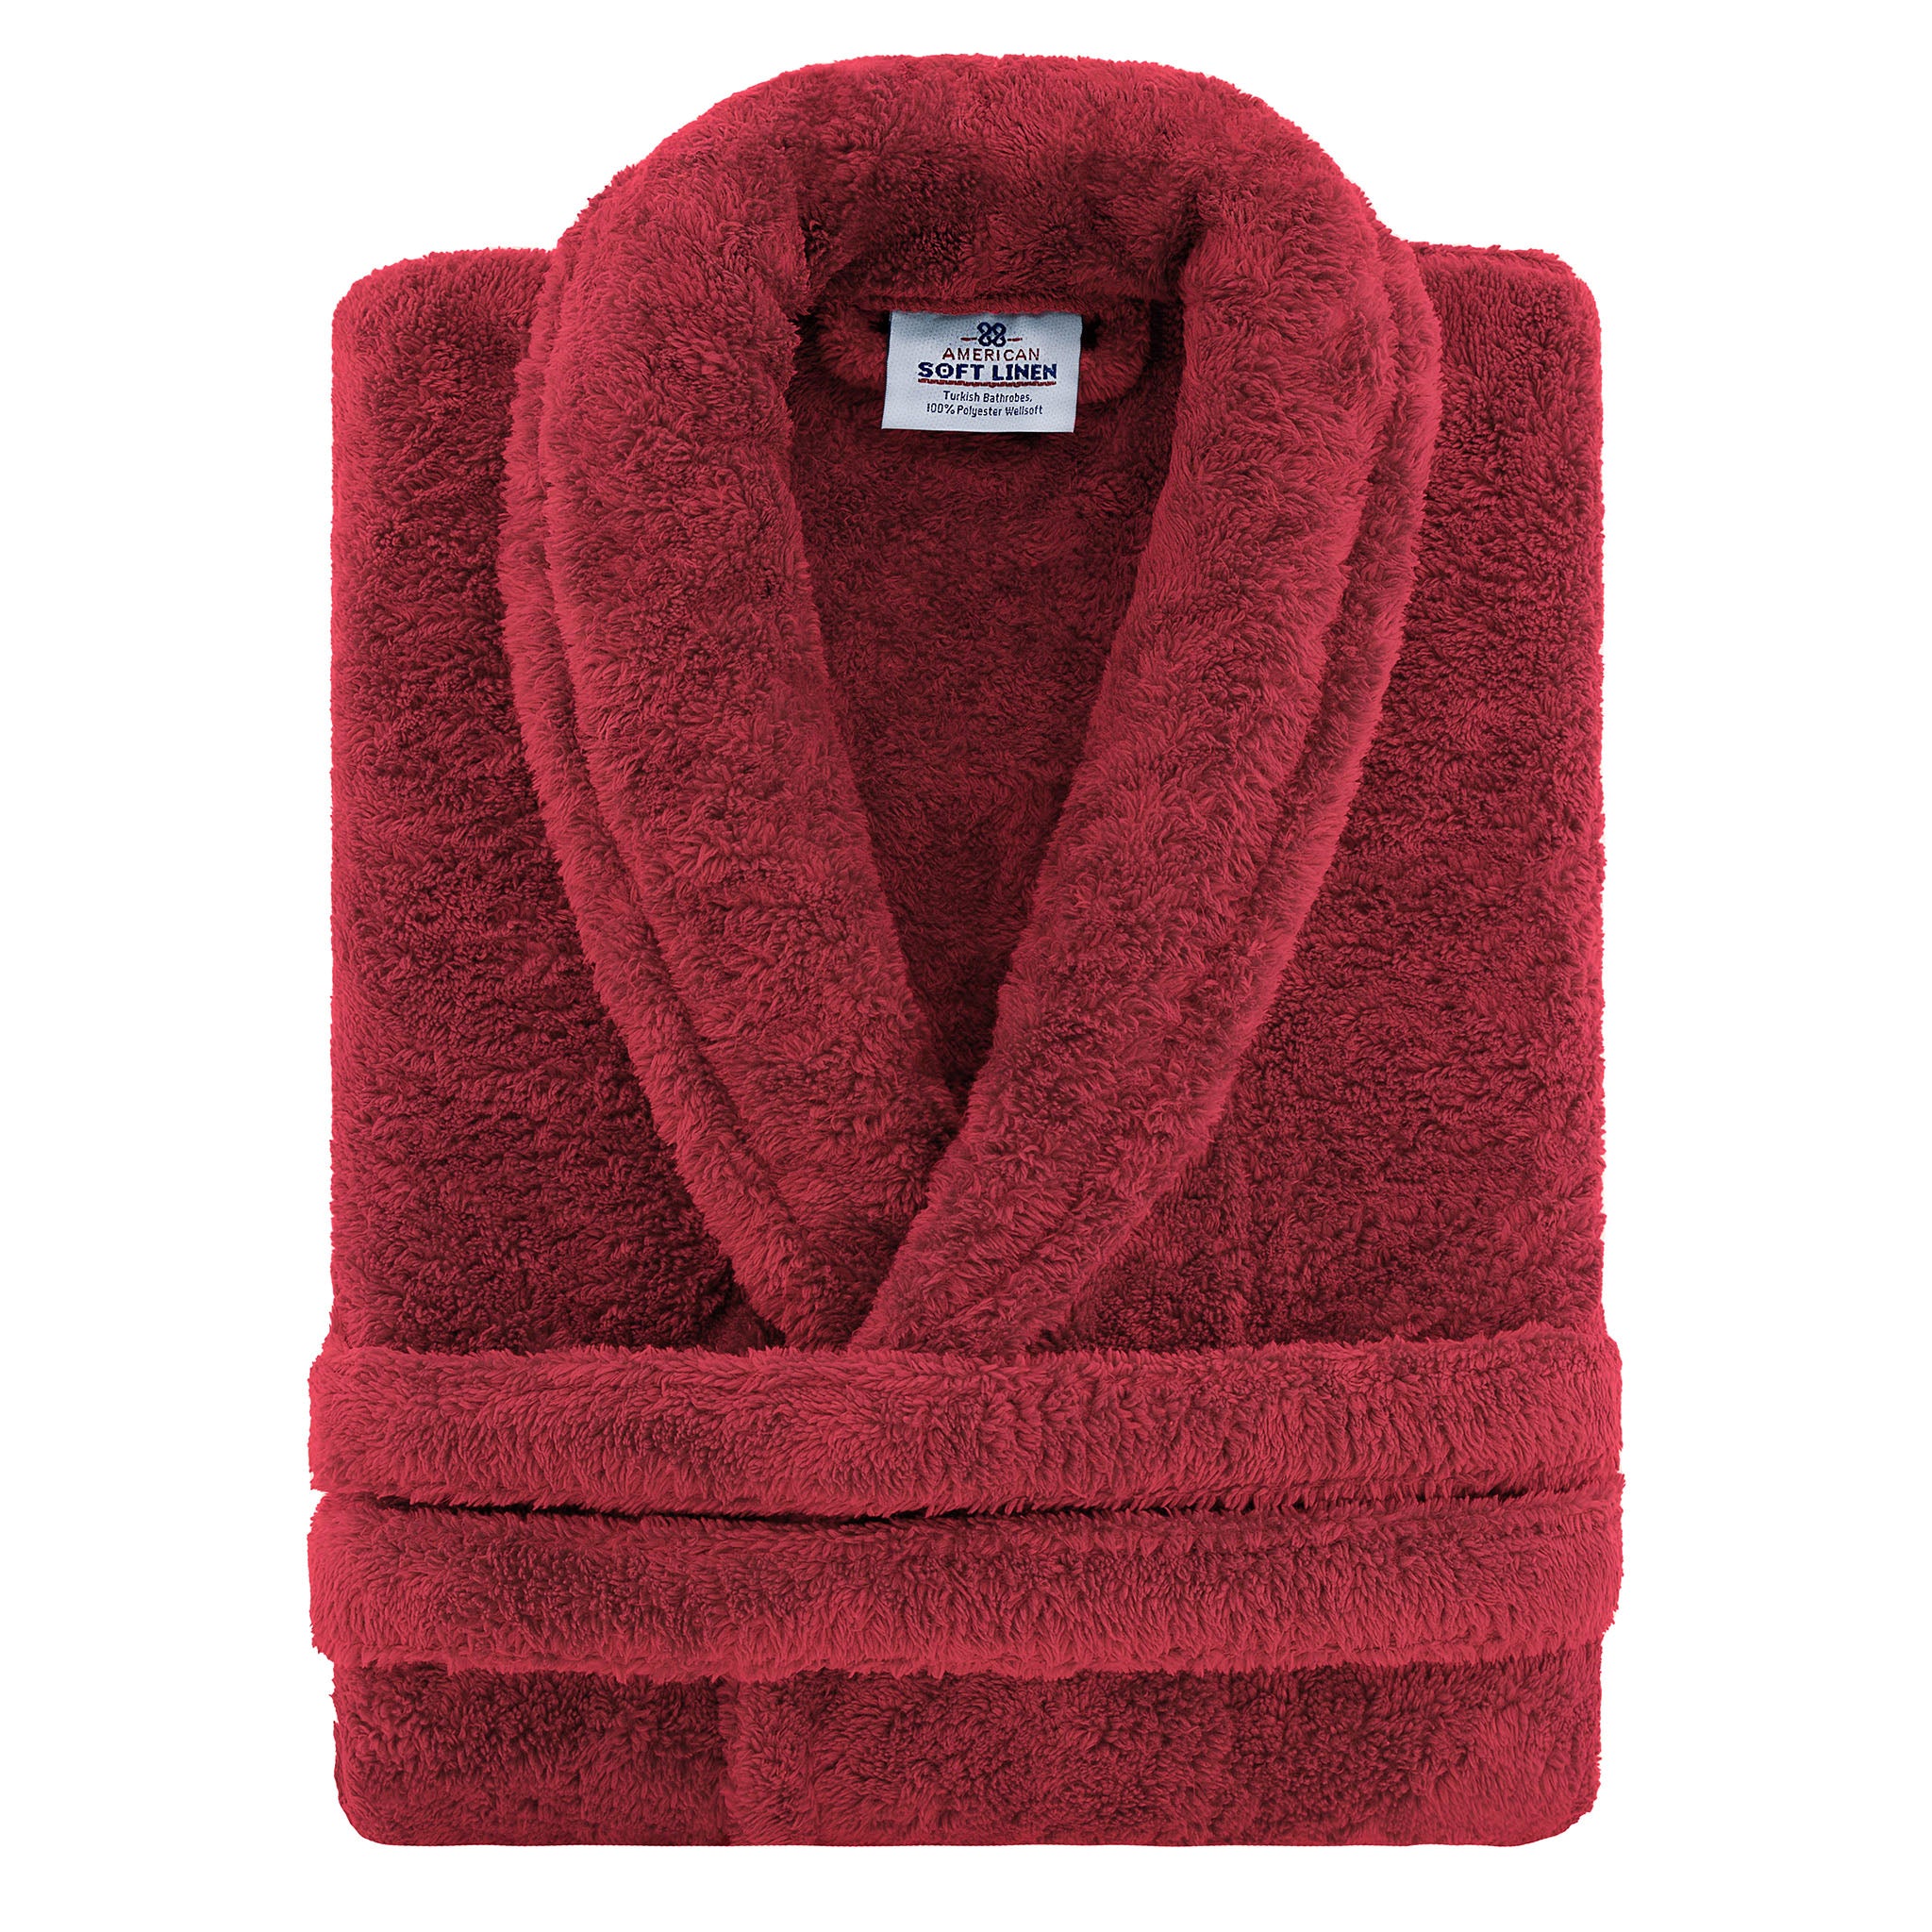 American Soft Linen Super Soft Absorbent and Fluffy Unisex Fleece Bathrobe -12 Set Case Pack -S-M-Bordeaux-red-3